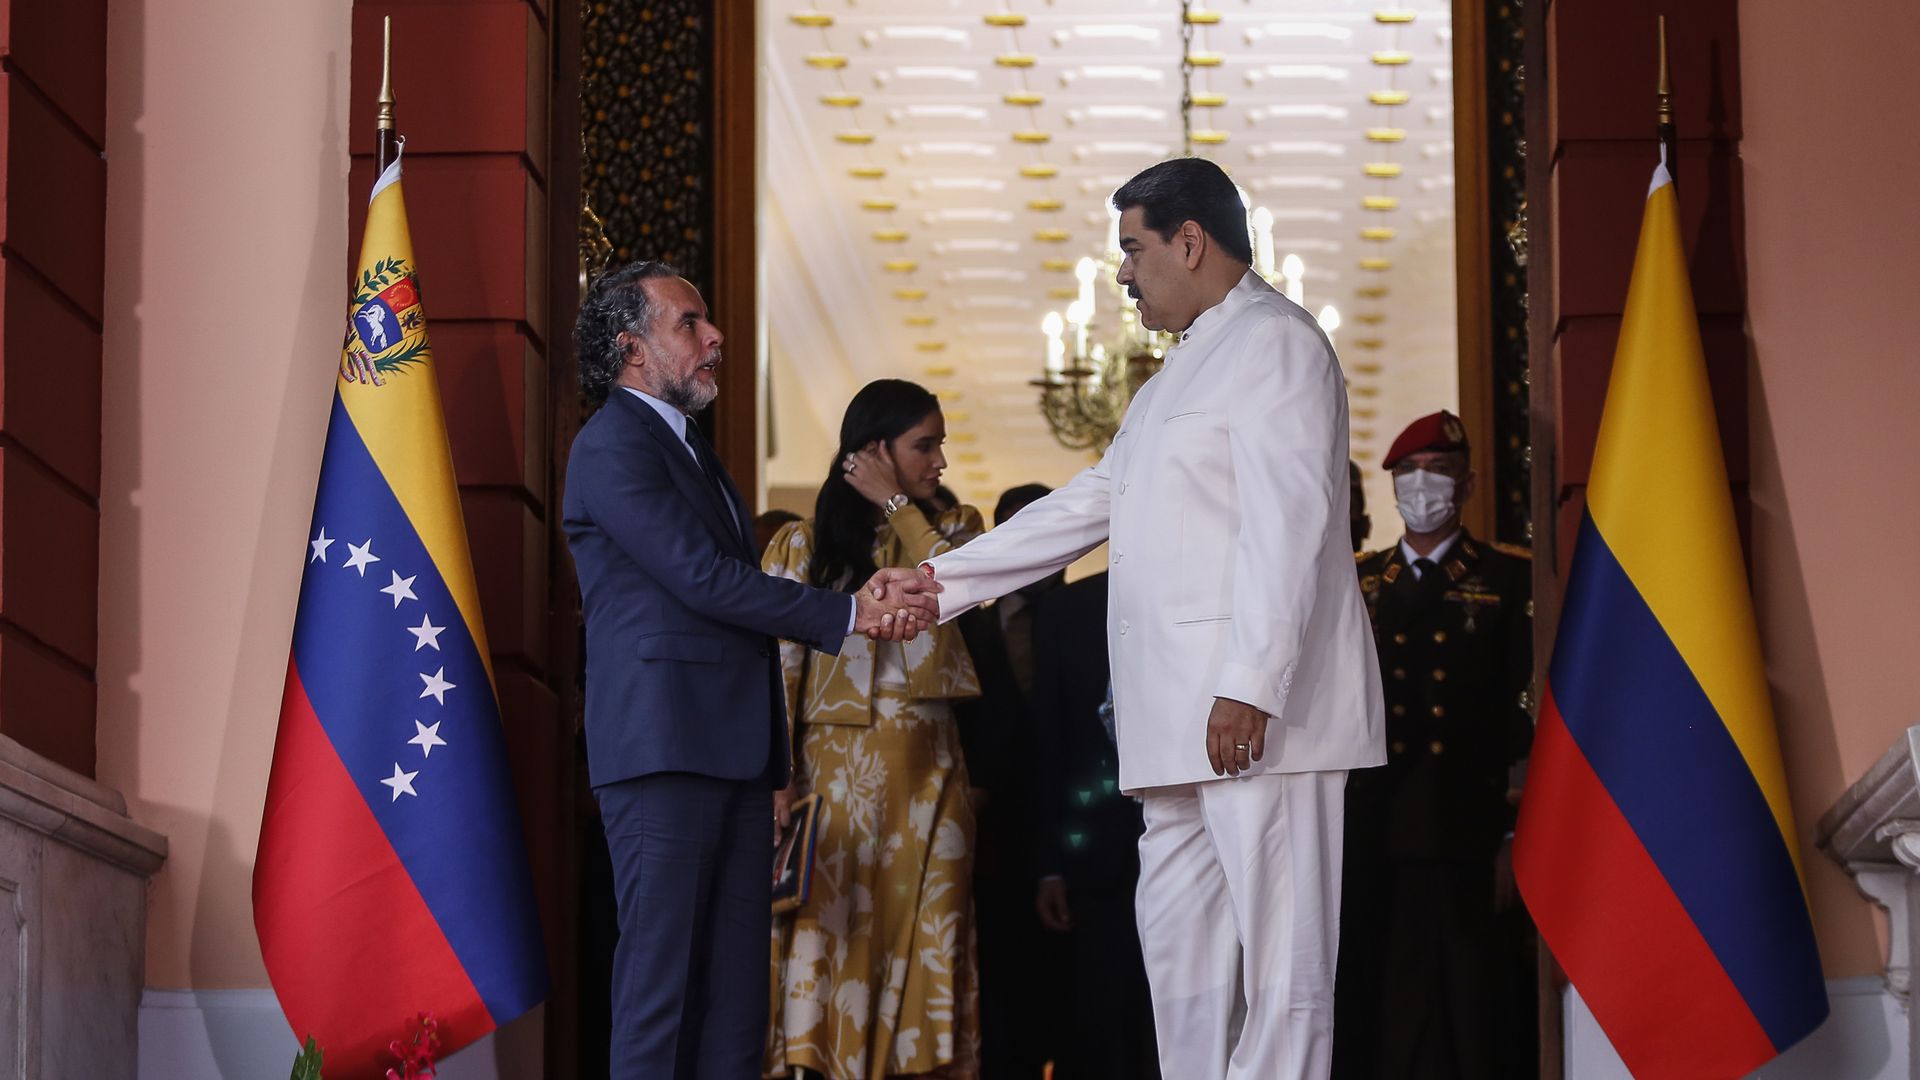 Colombia's new ambassador to Venezuela, Armando Benedetti, shakes hands with Venezuela President Nicolas Maduro